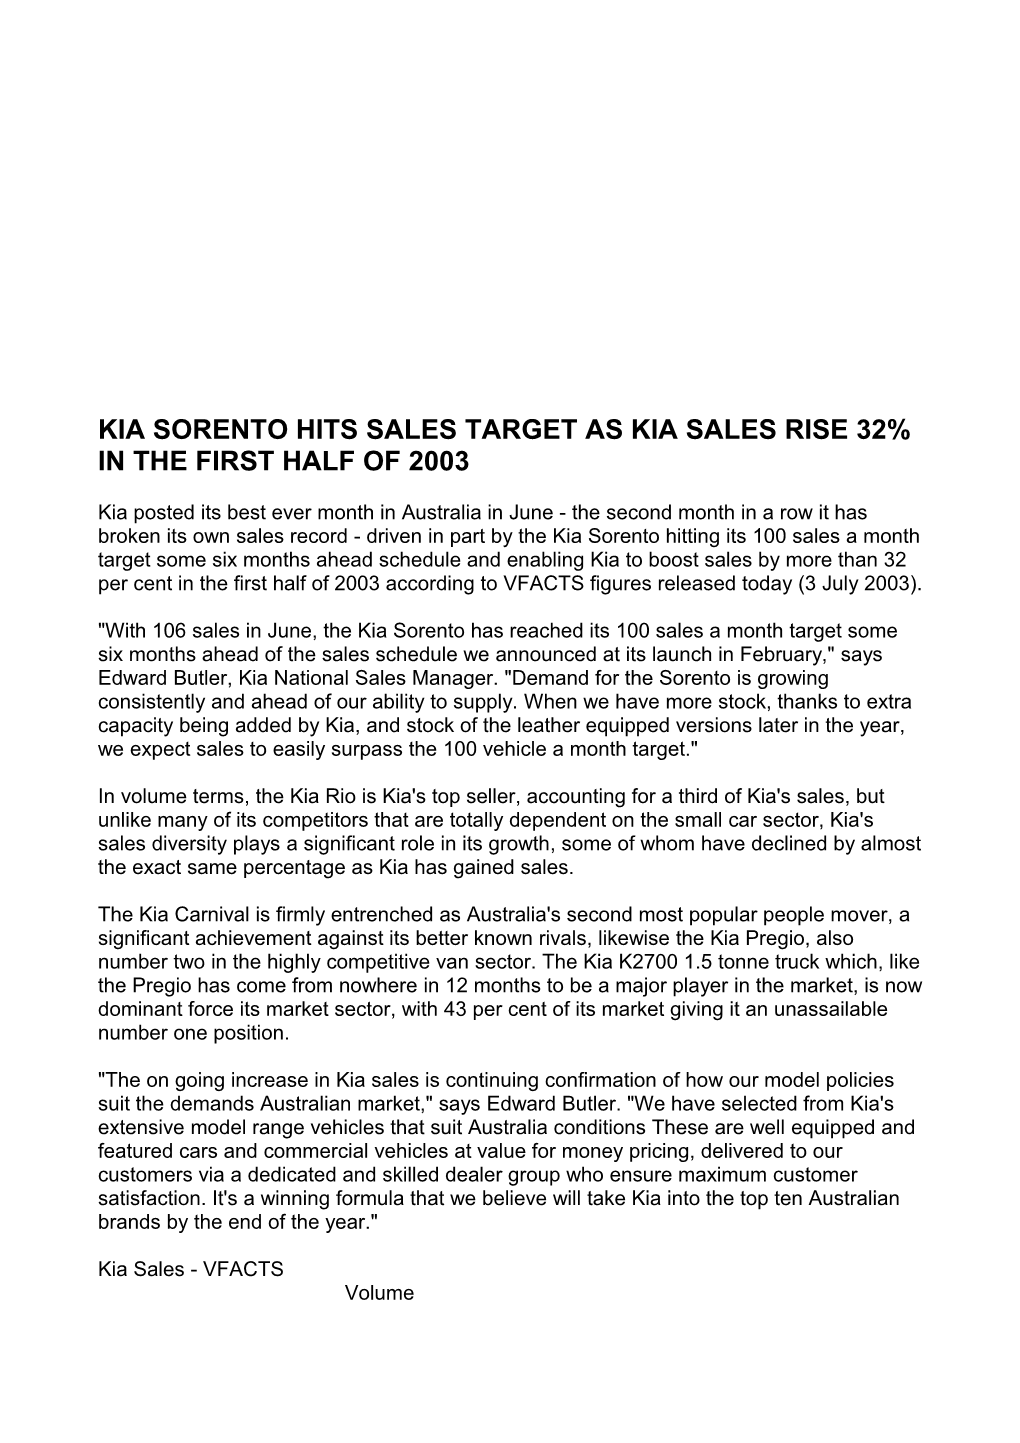 Kia Sorento Hits Sales Target As Kia Sales Rise 32% in the First Half of 2003